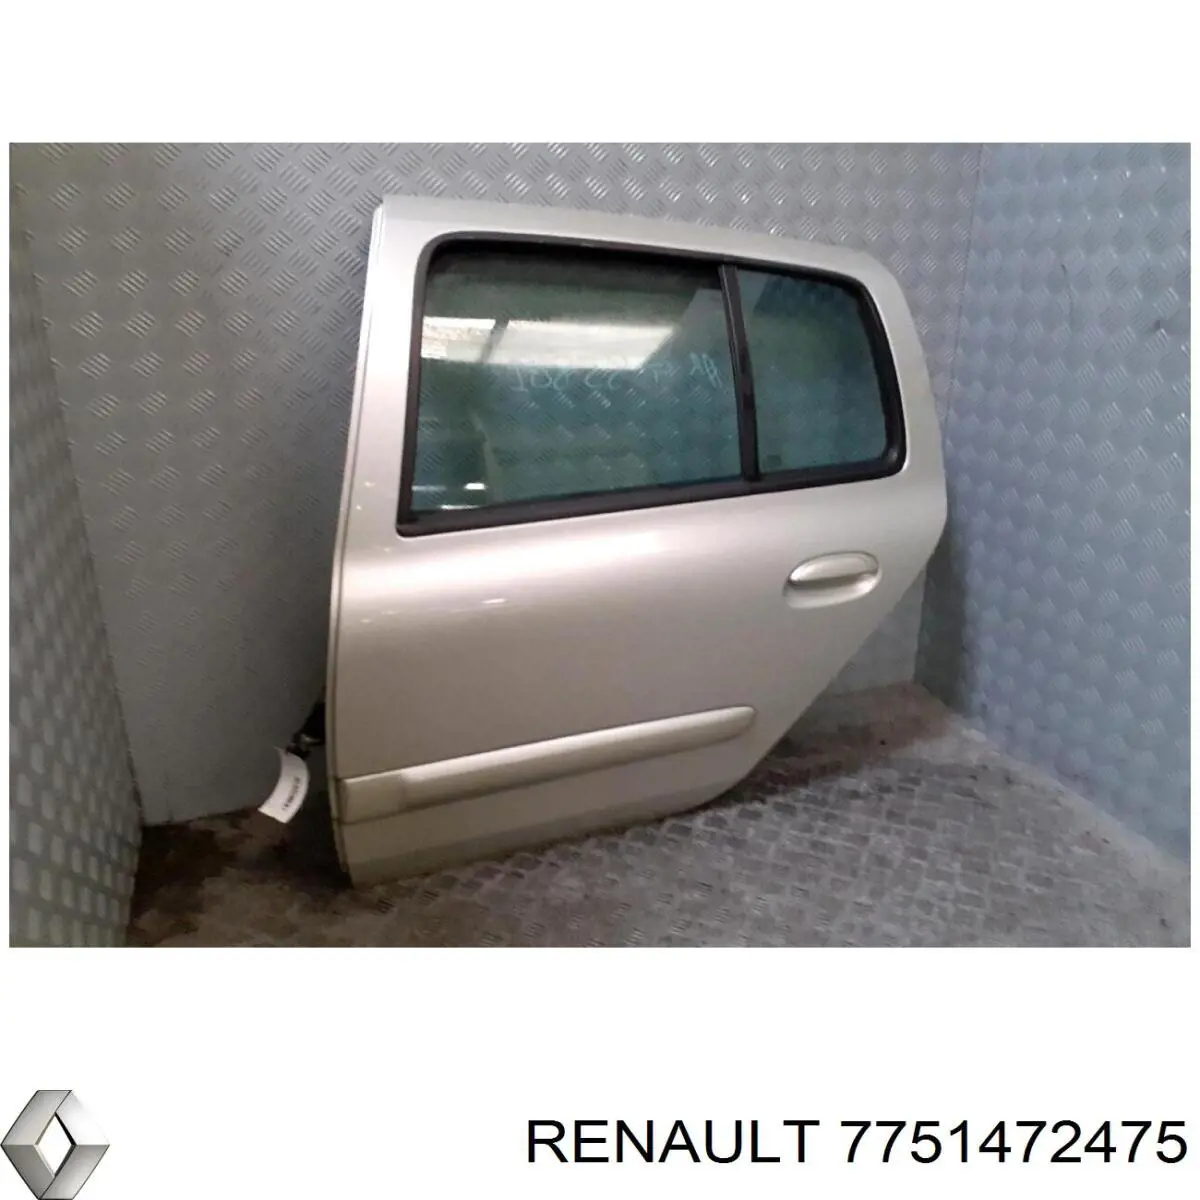 7752261286 Renault (RVI) puerta trasera izquierda